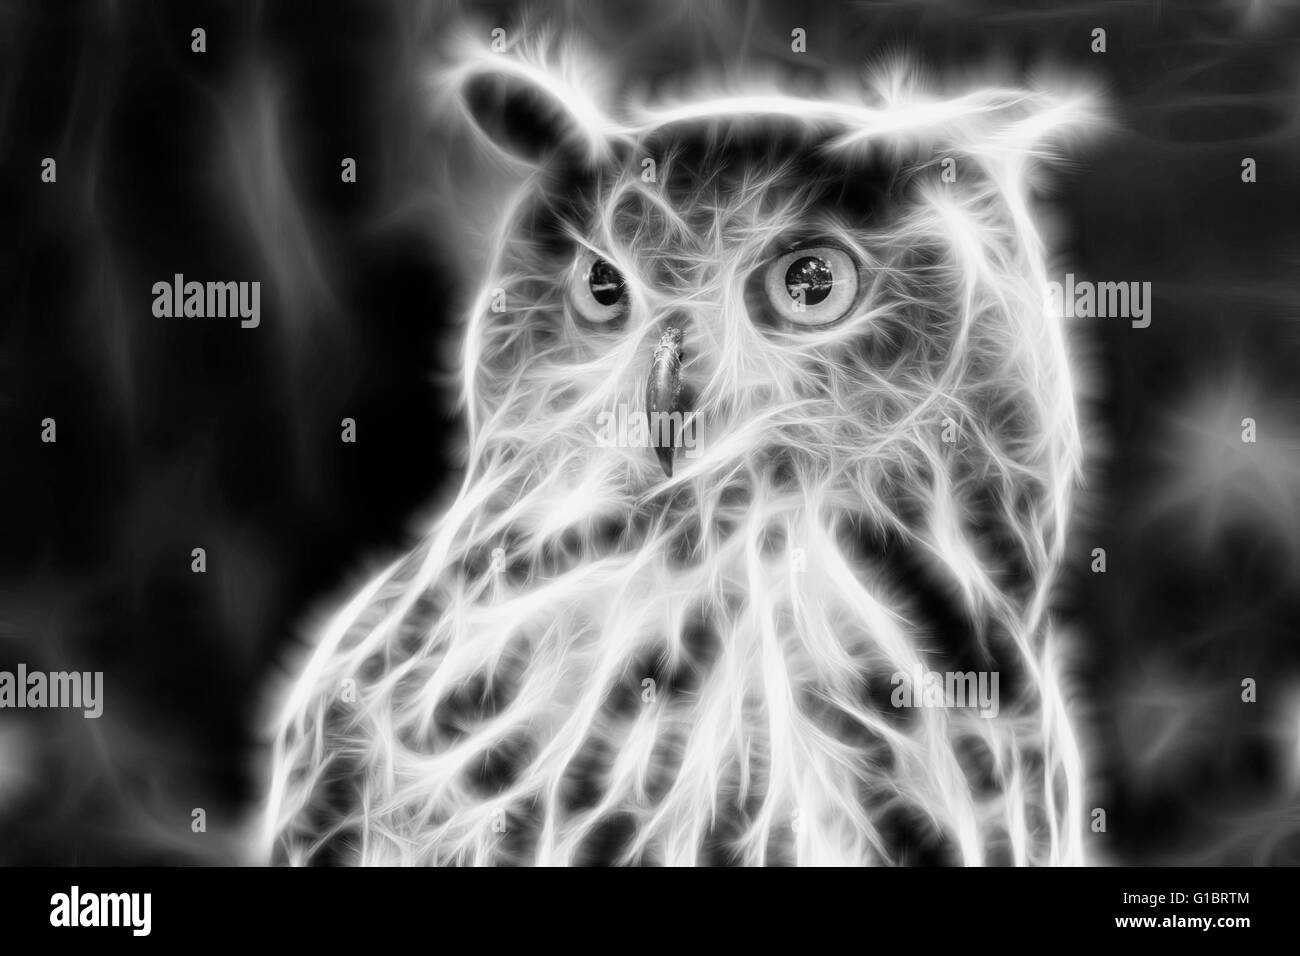 Eagle Owl/An eagle owl portrait, fractal Stock Photo